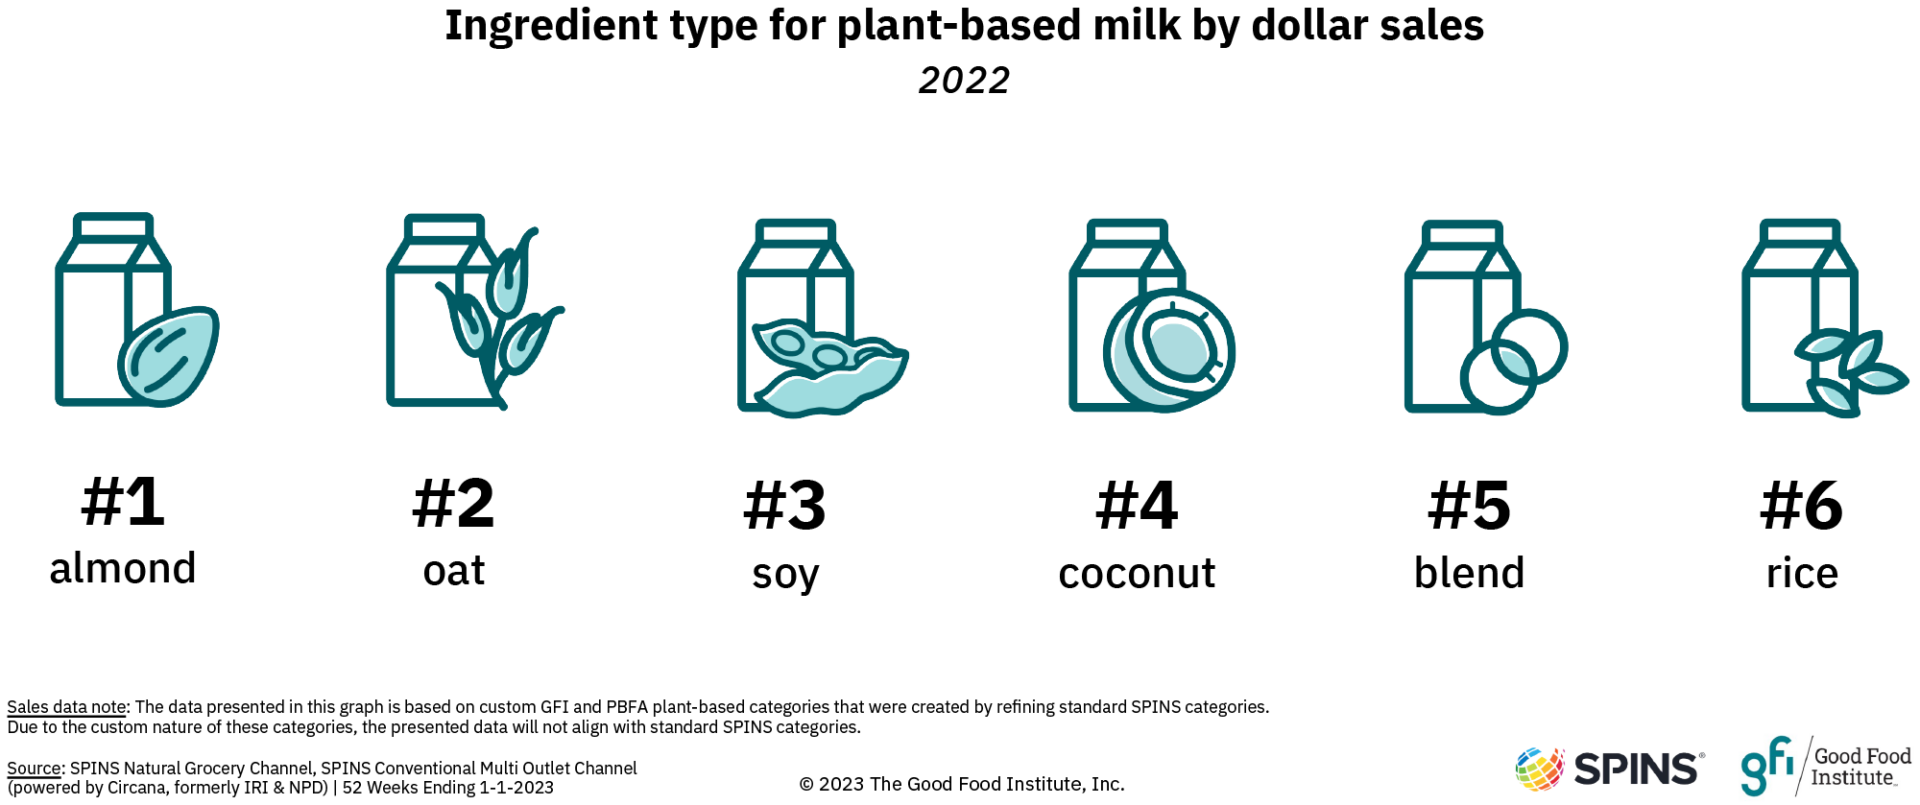 An illustration of the plant-based milk segment ingredient base